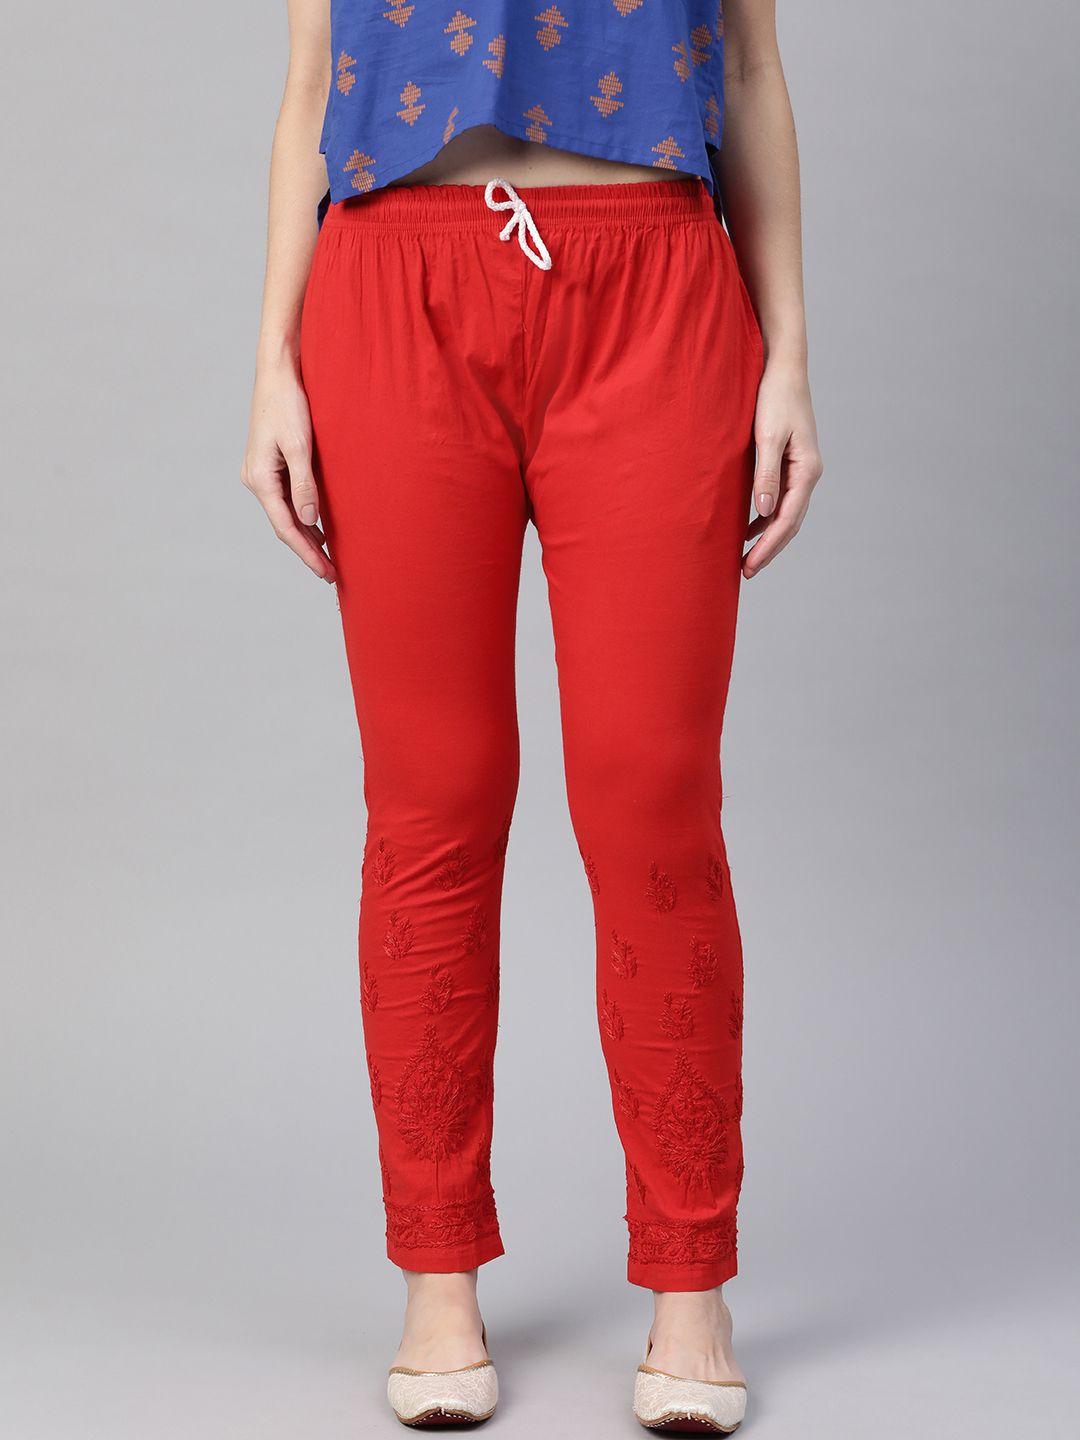 saadgi-women-red-chikankari-embroidered-cotton-handloom-slim-fit-cigarette-trousers